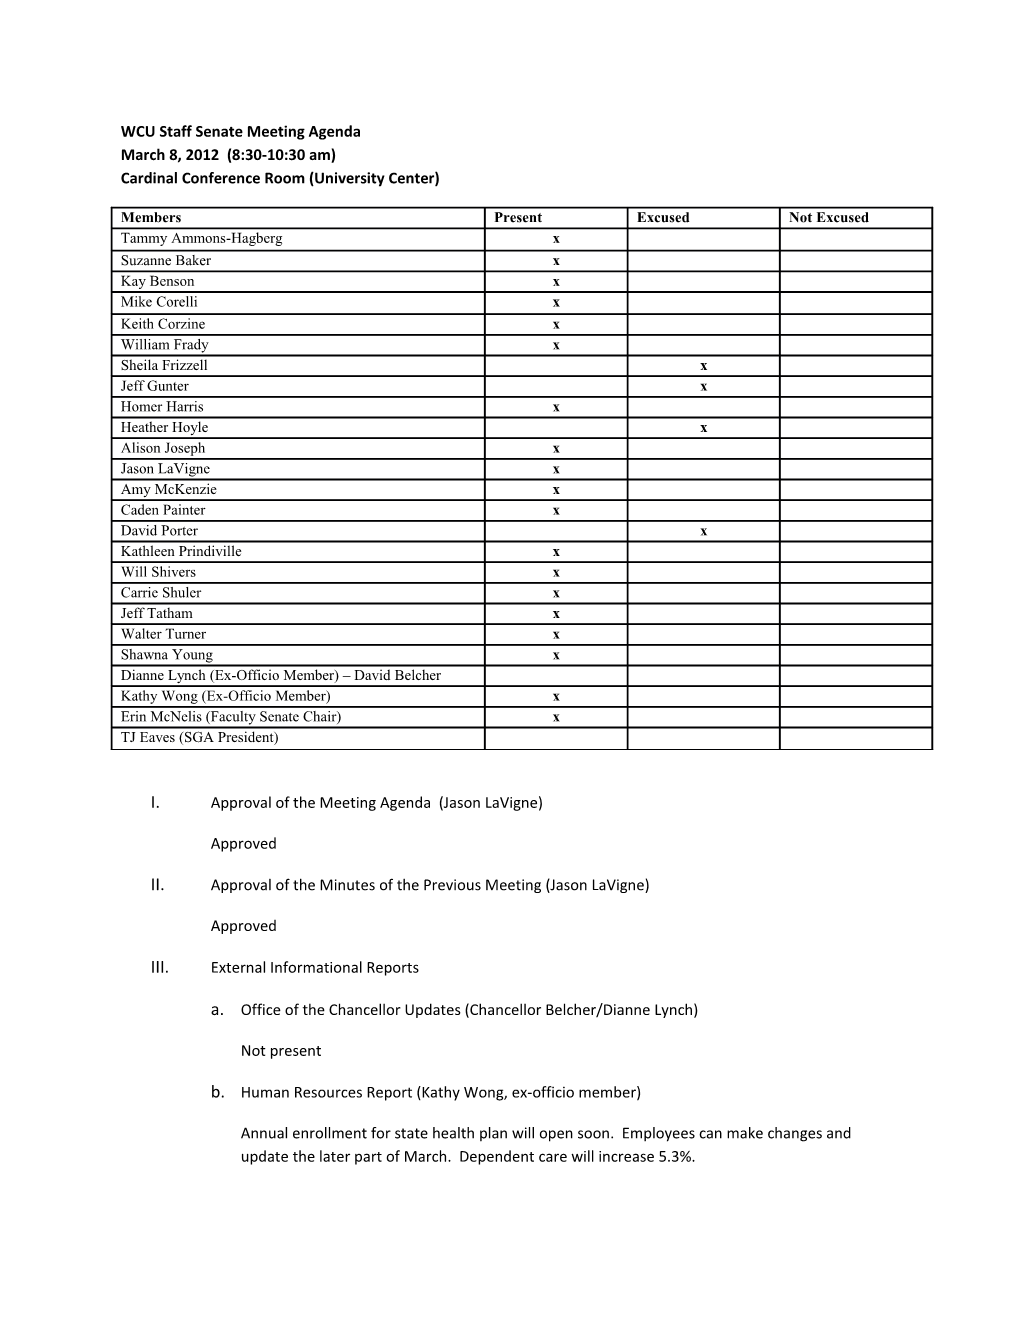 Staff Senate Minutes - April 2012